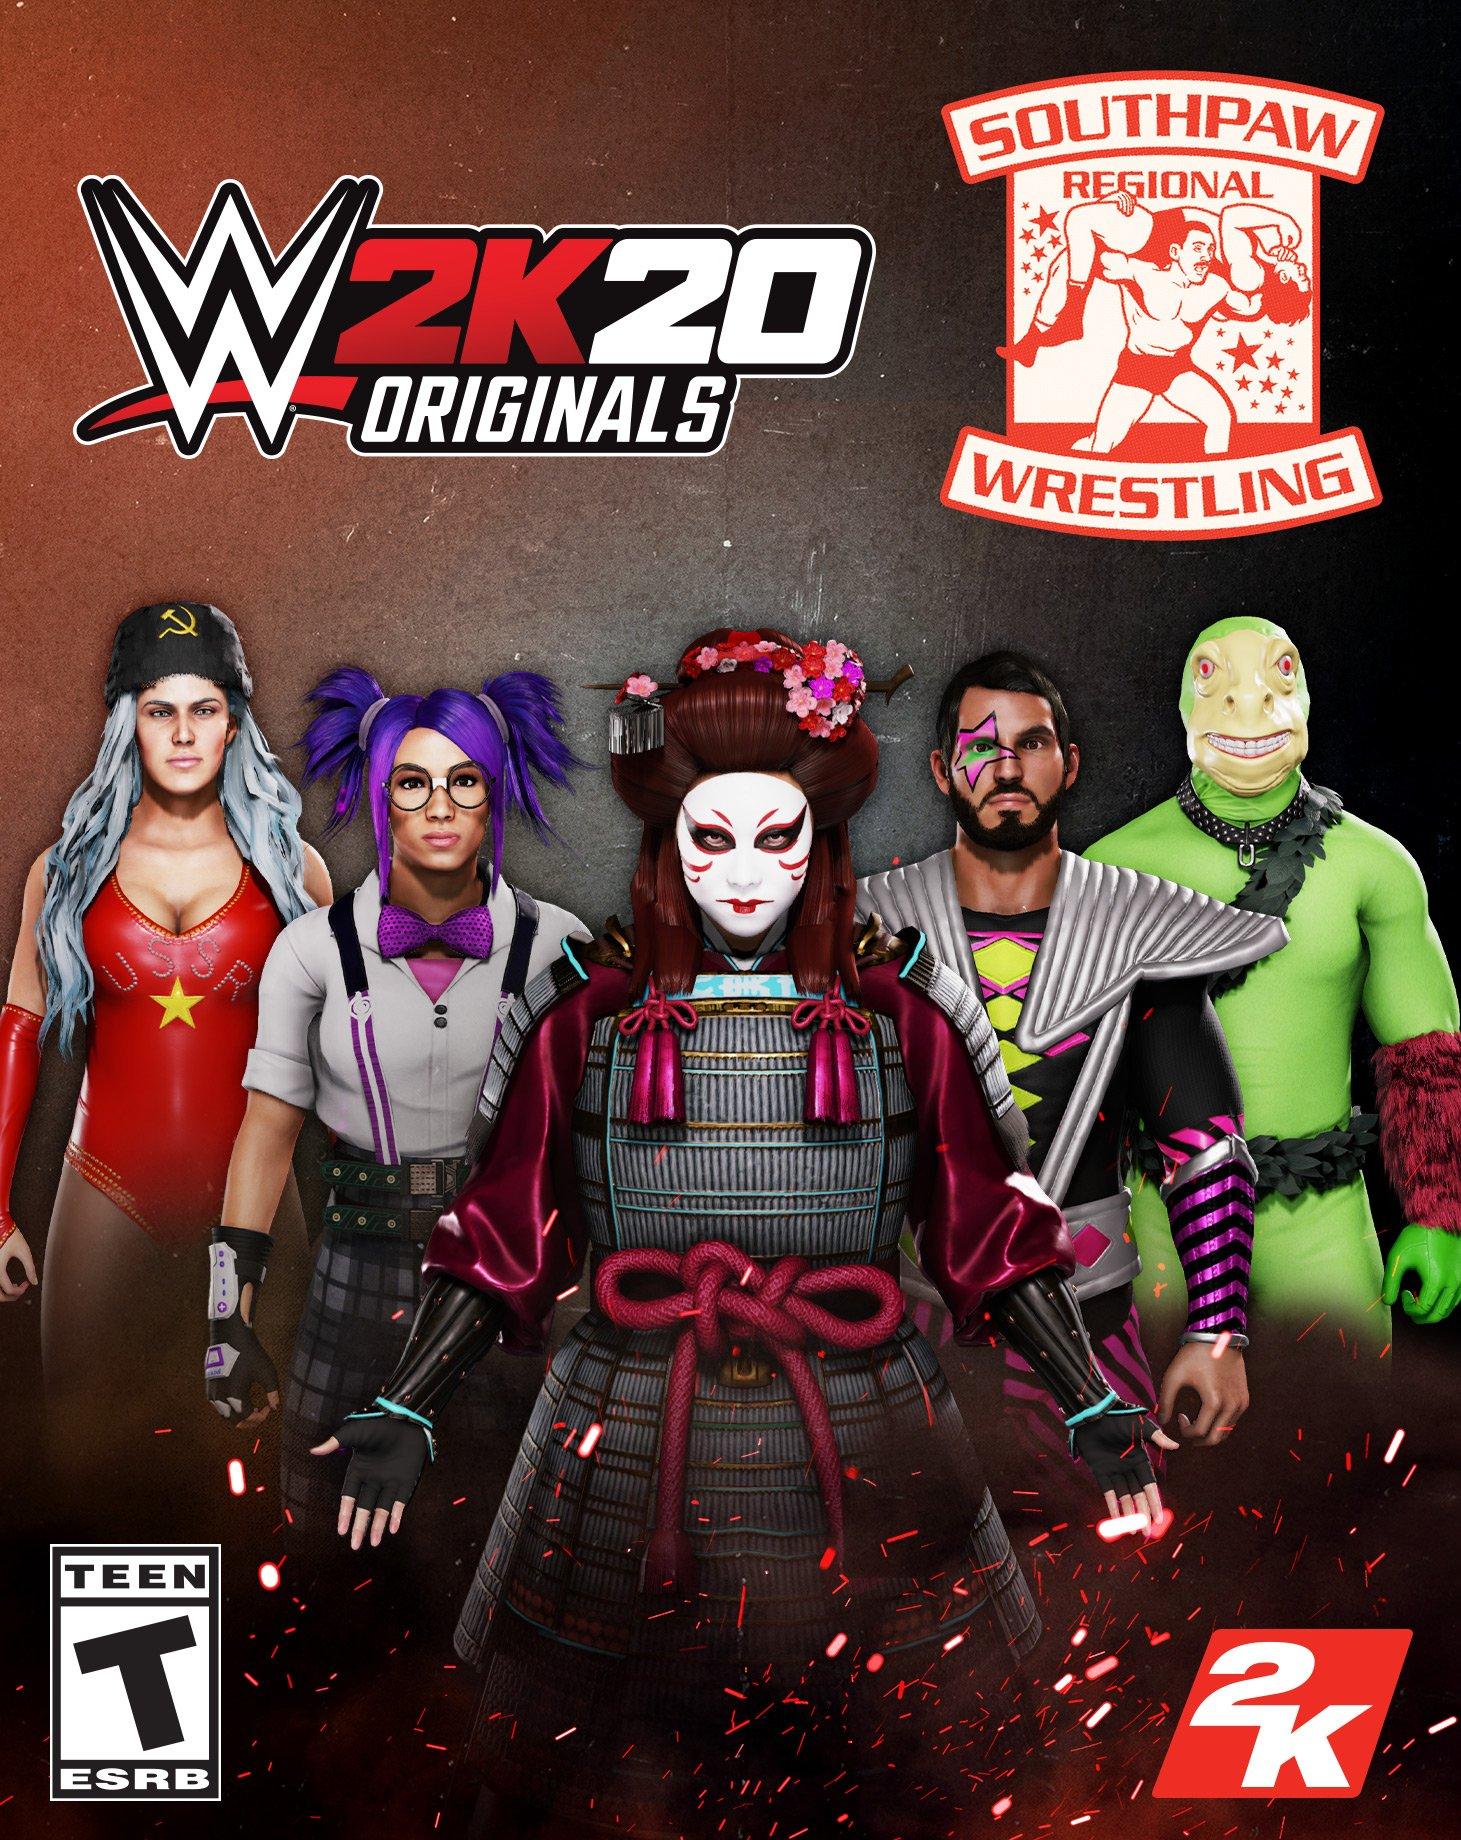 WWE 2K20 Originals: Southpaw Regional Wrestling DLC - PC, Digital